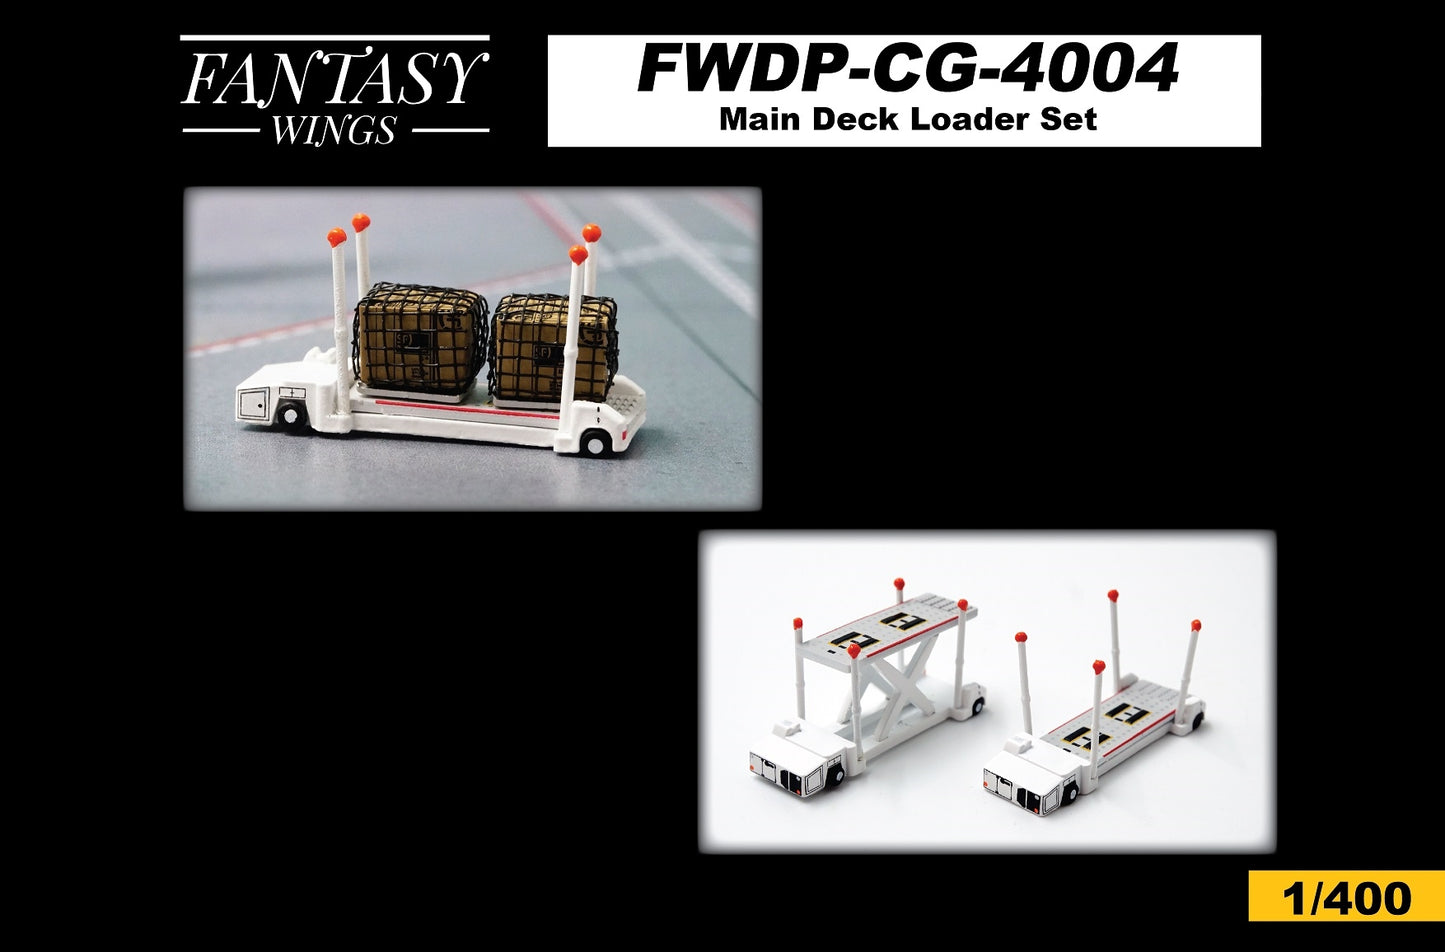 1/400 Main Deck Loader Set Fantasy Wings FWDP-CG-4004